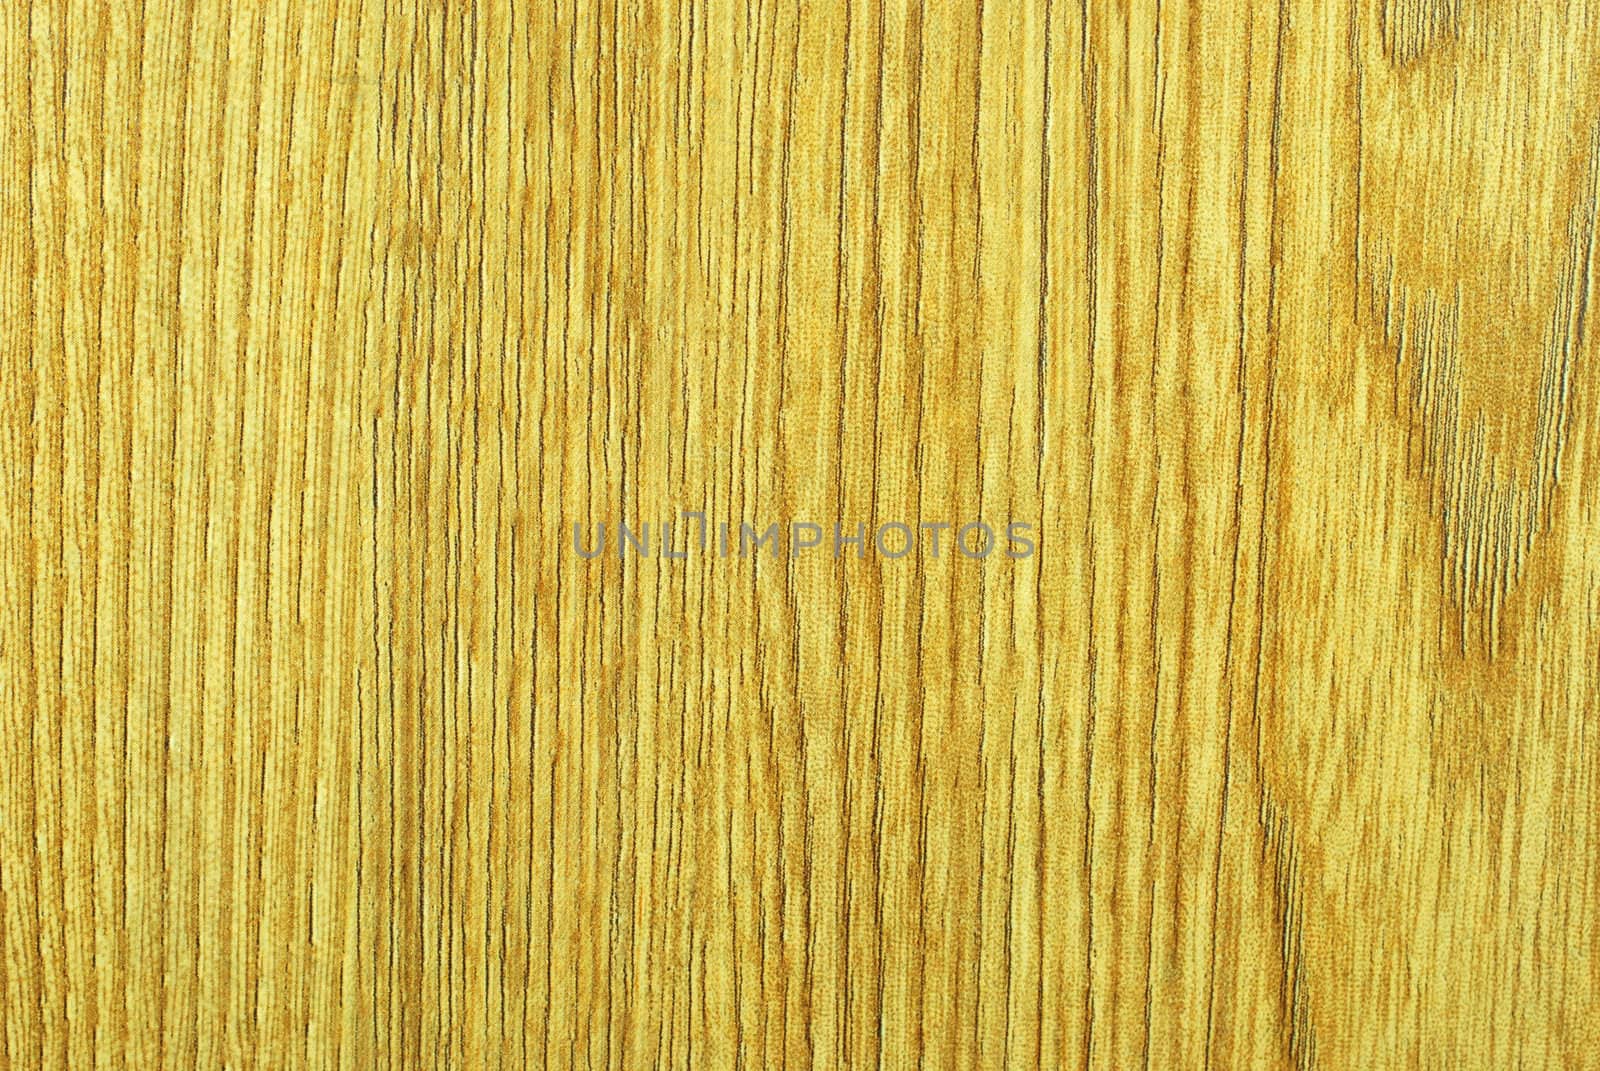 Macro Wood Background by dehooks